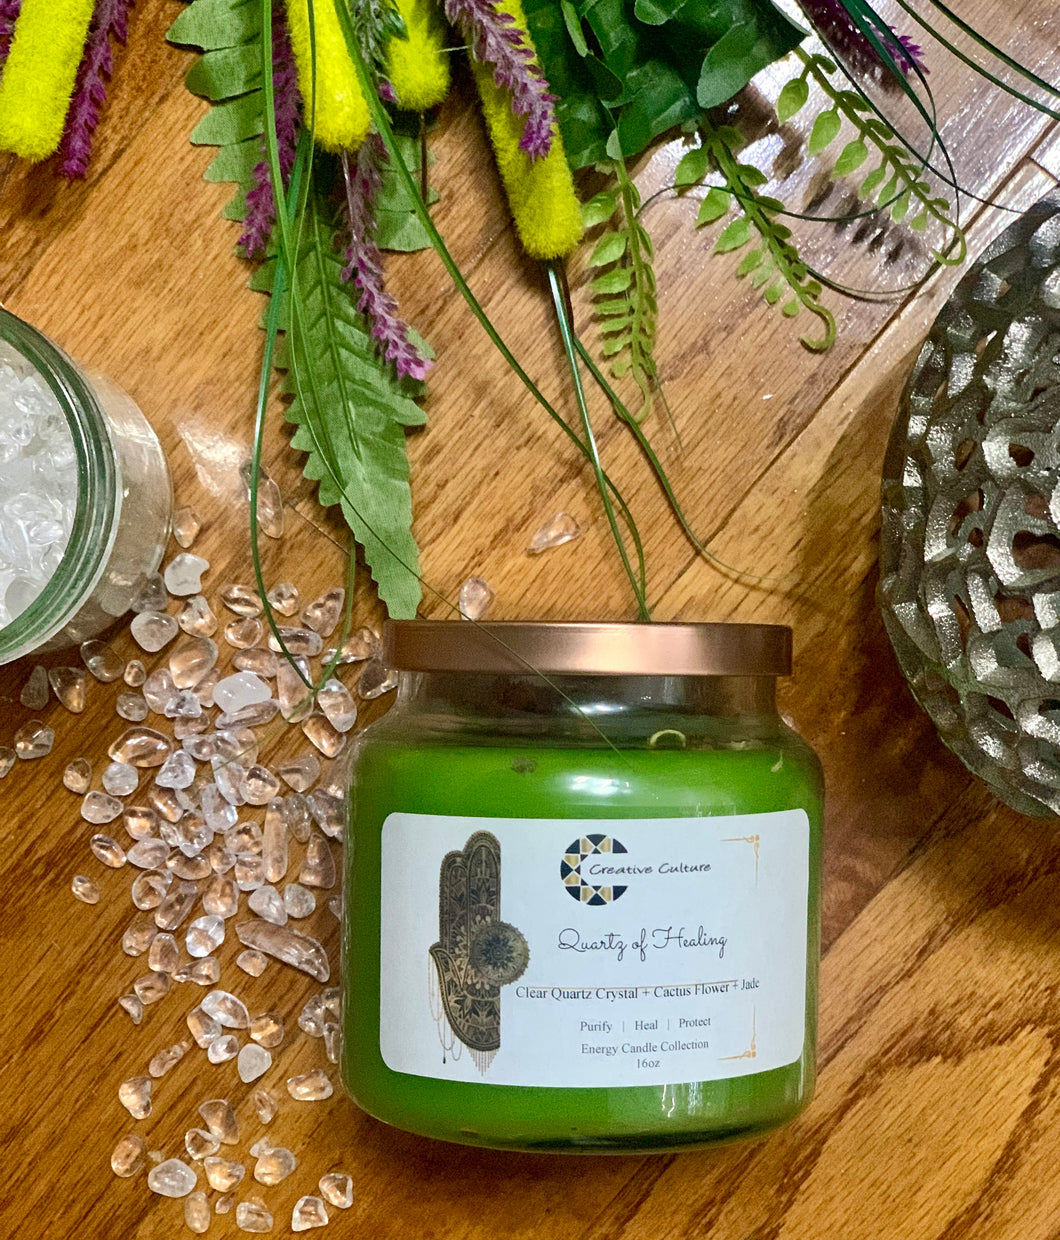 Quartz of Healing - Cactus Flower & Jade Energy Candle